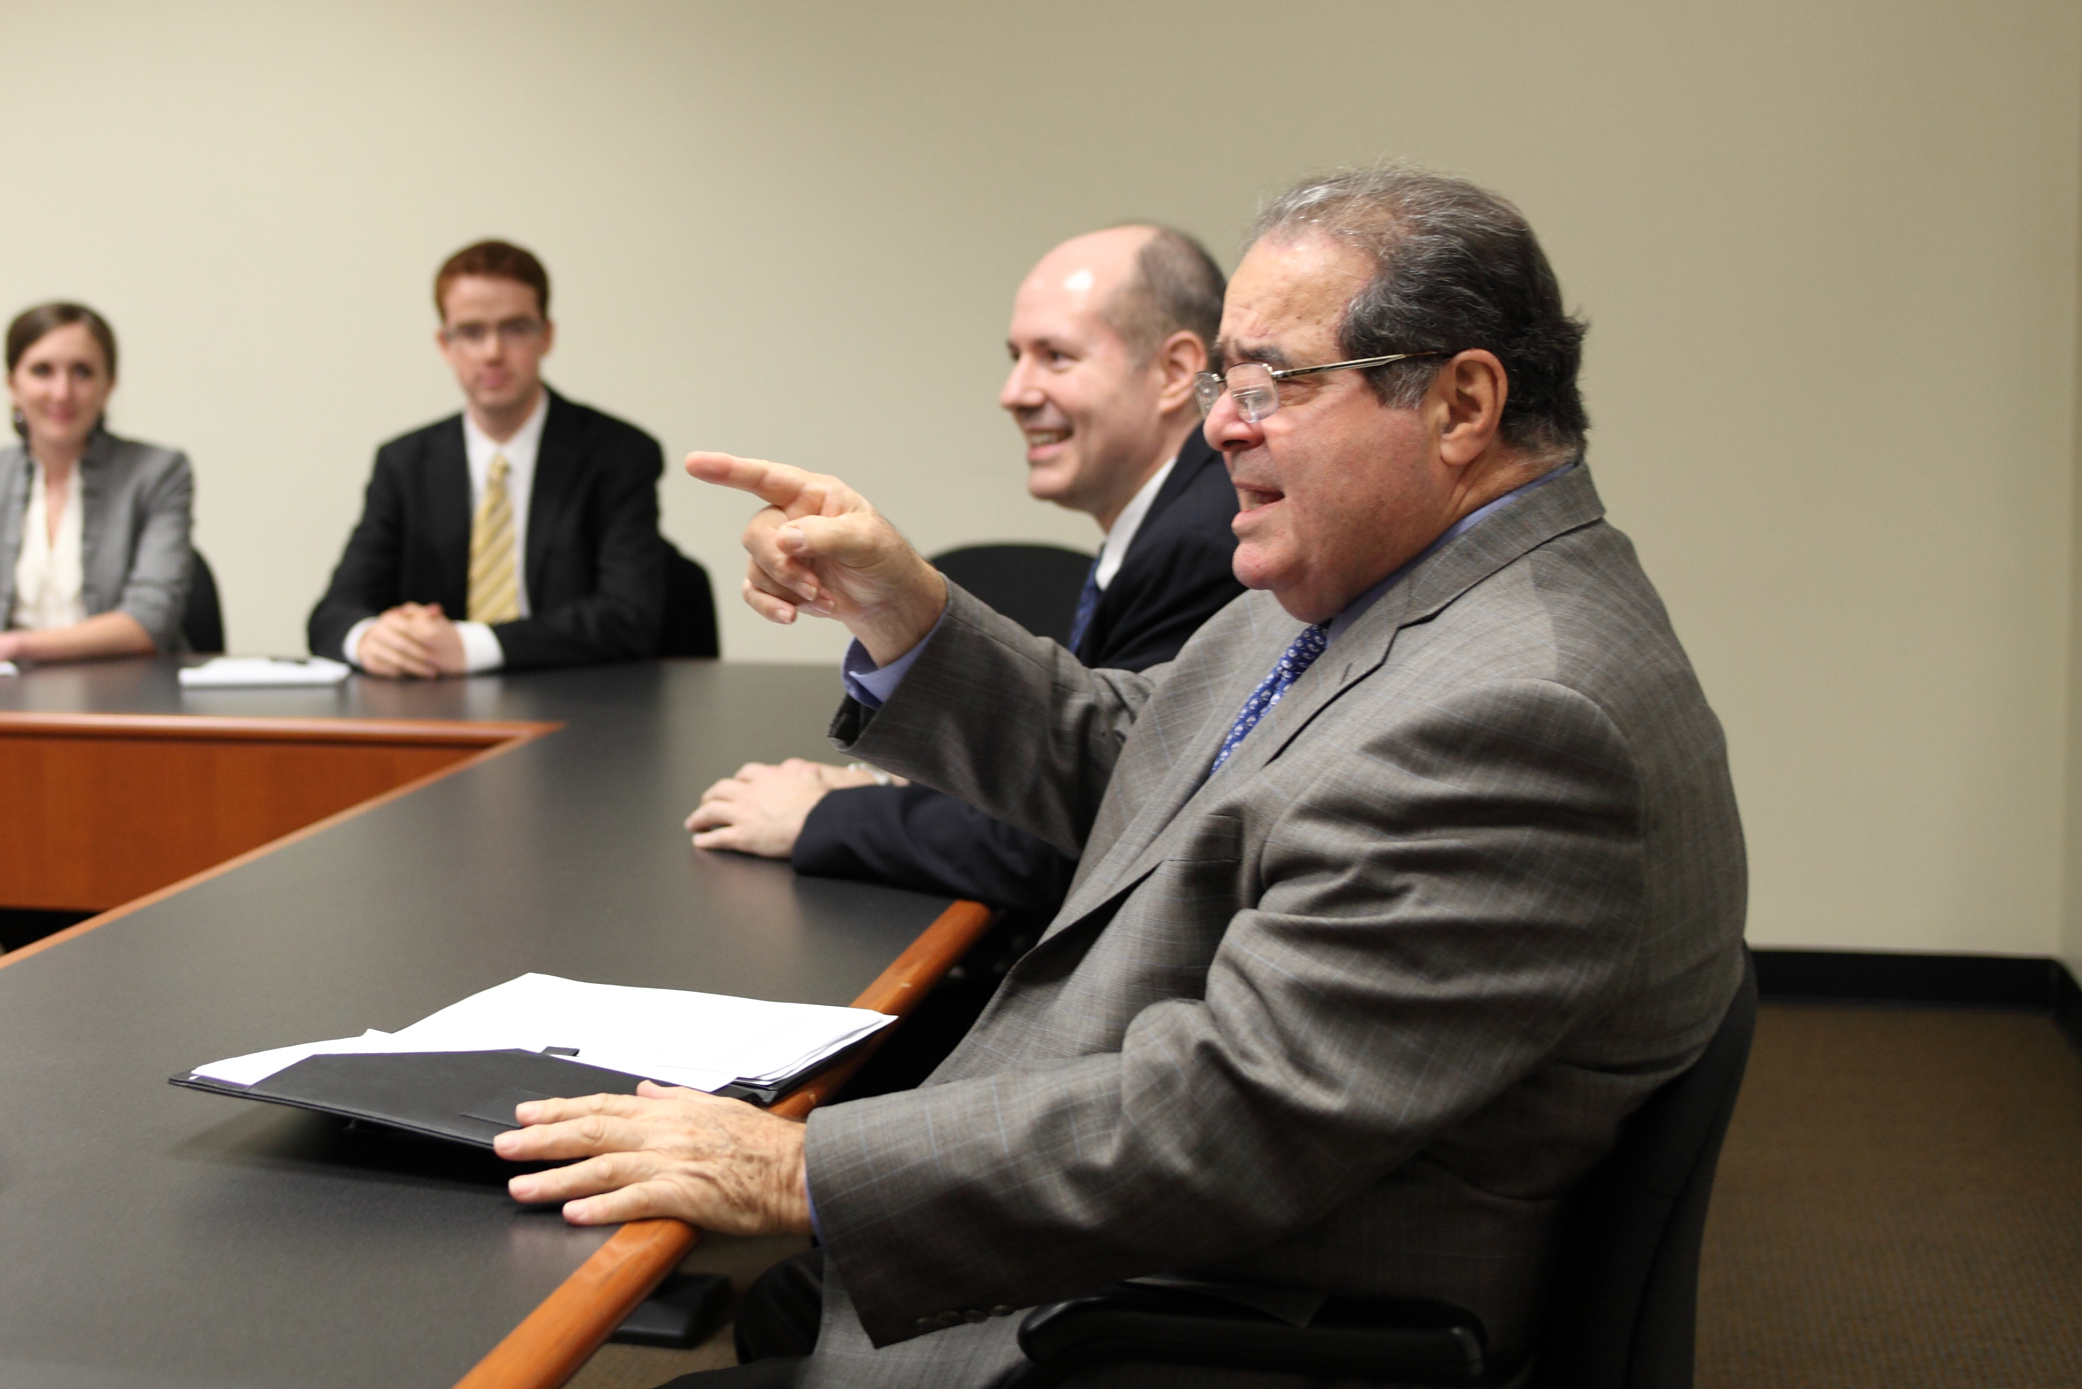 Antonin Scalia, foreground, with Bradford Clark at a symposium at GW Law in 2011. (Photo courtesy GW Law)